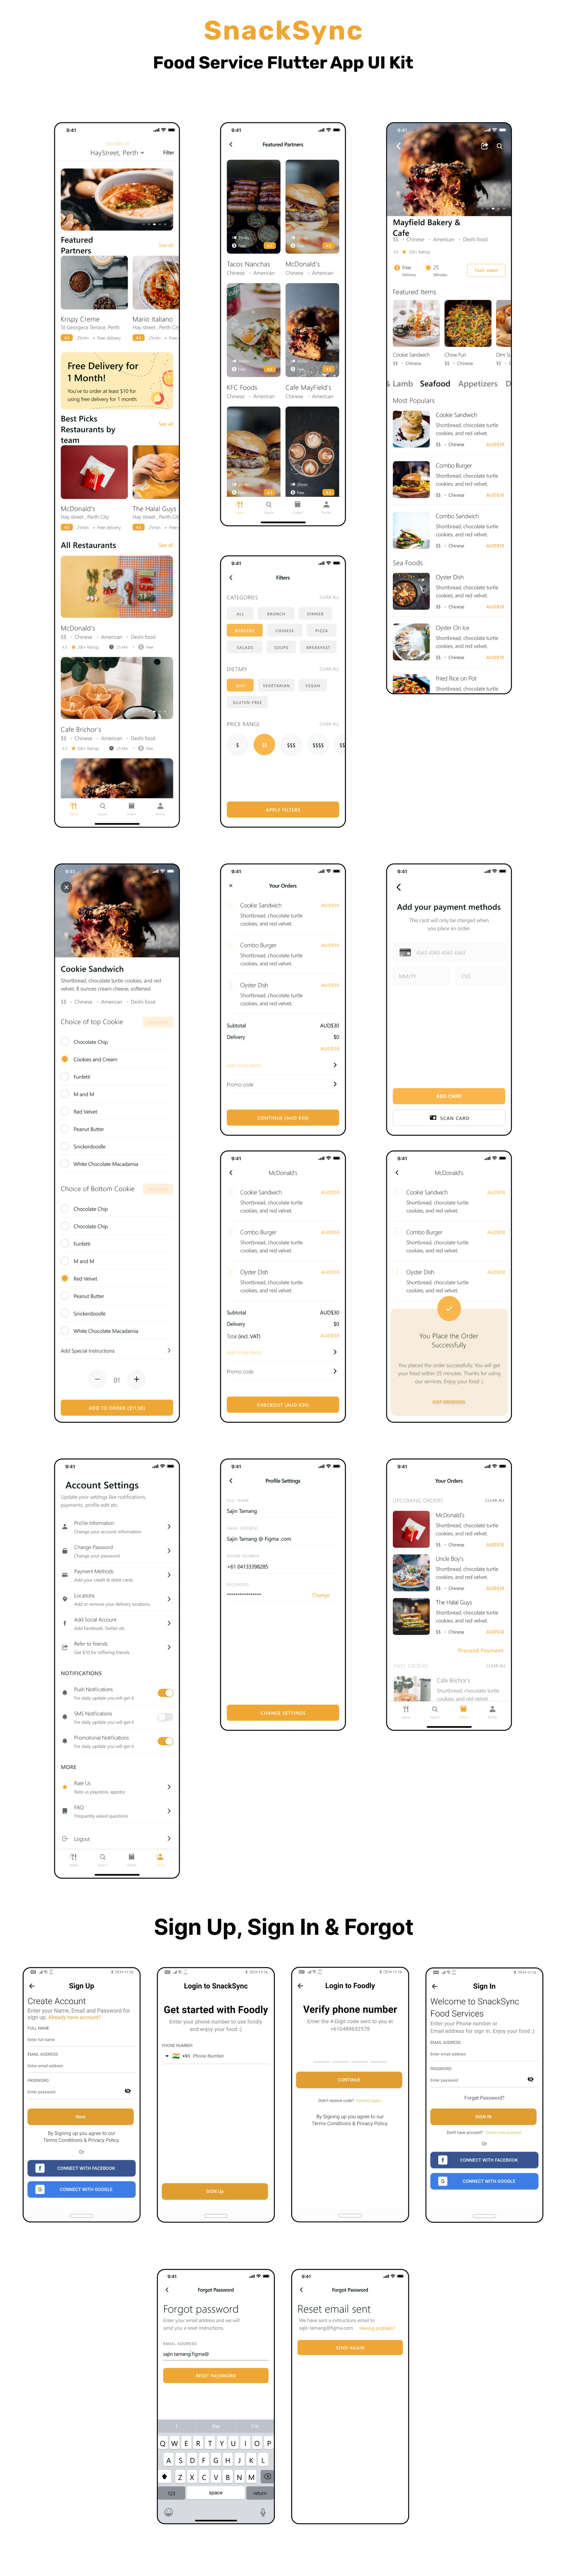 SnackSync Food Service App | iOS/Android - Flutter UI Kit - 2